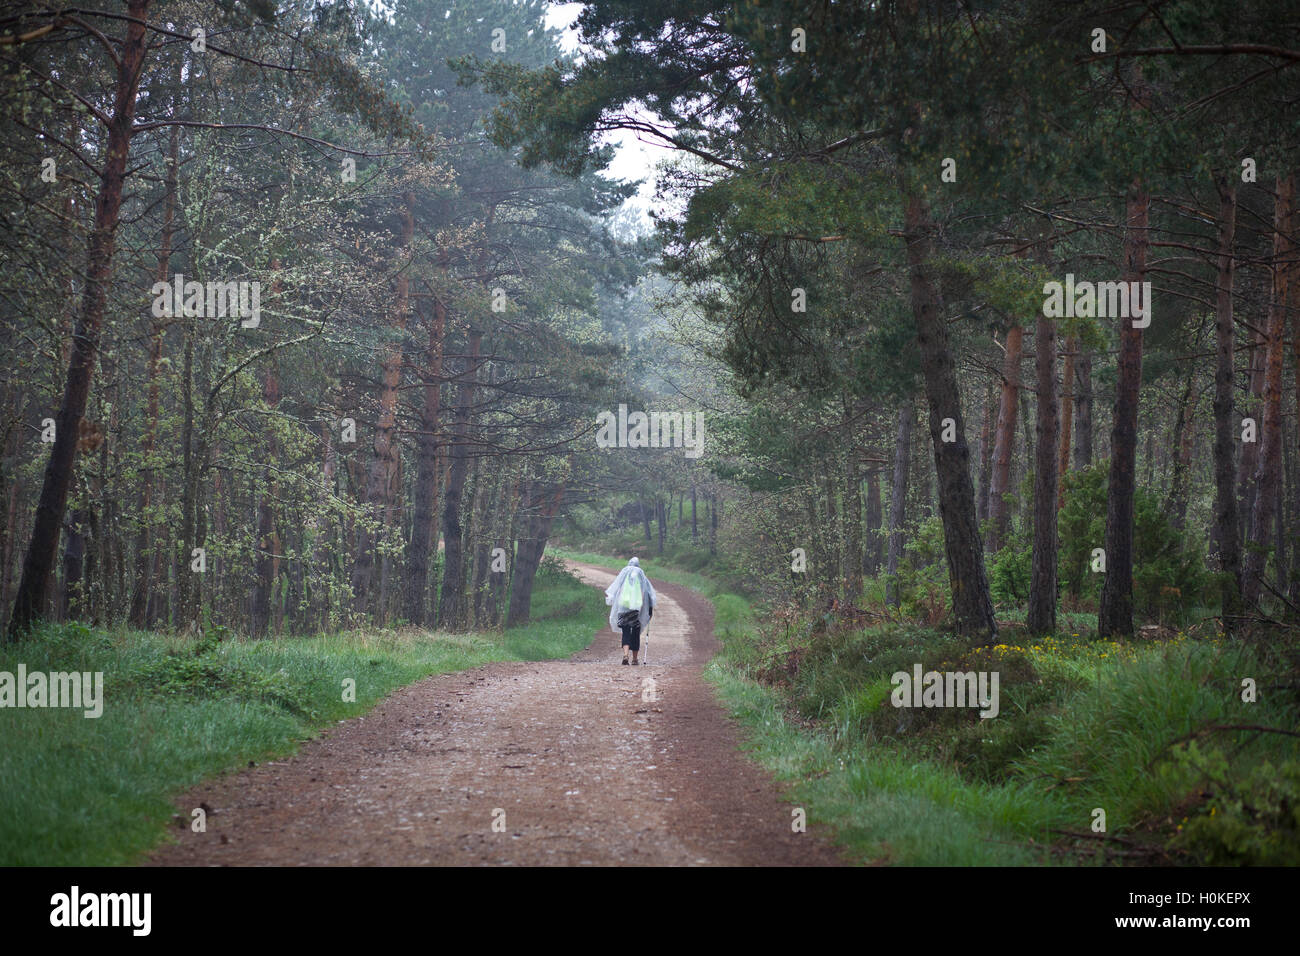 Person with rain coat on walking the Camino de Santiago, route Frances Stock Photo